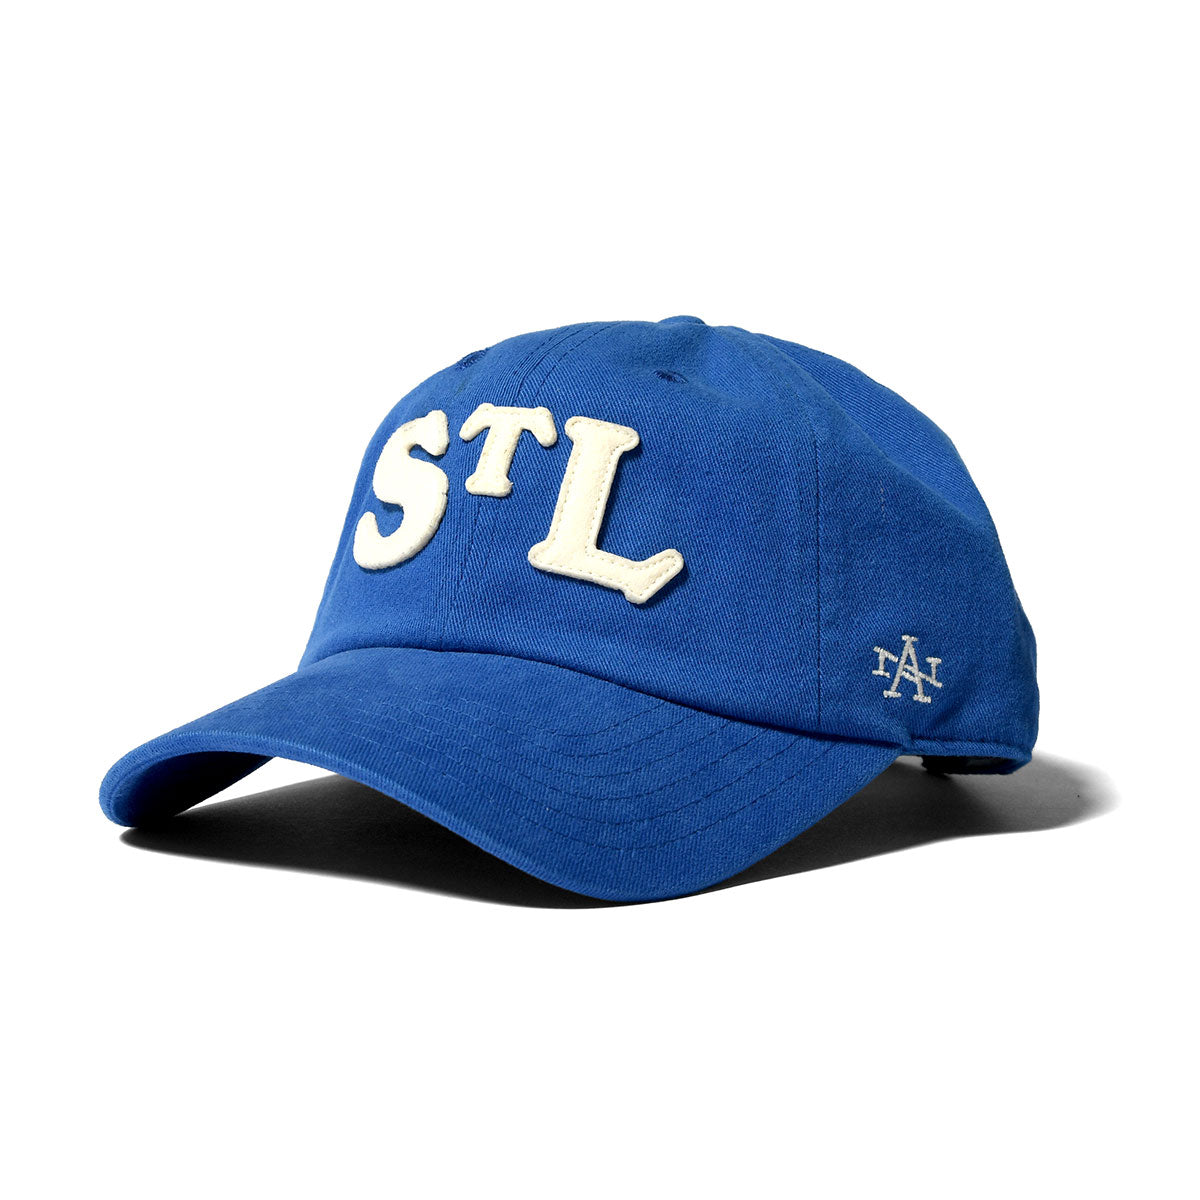 AMERICAN NEEDLE Archive - St Louis Stars【SMU694ASLS】